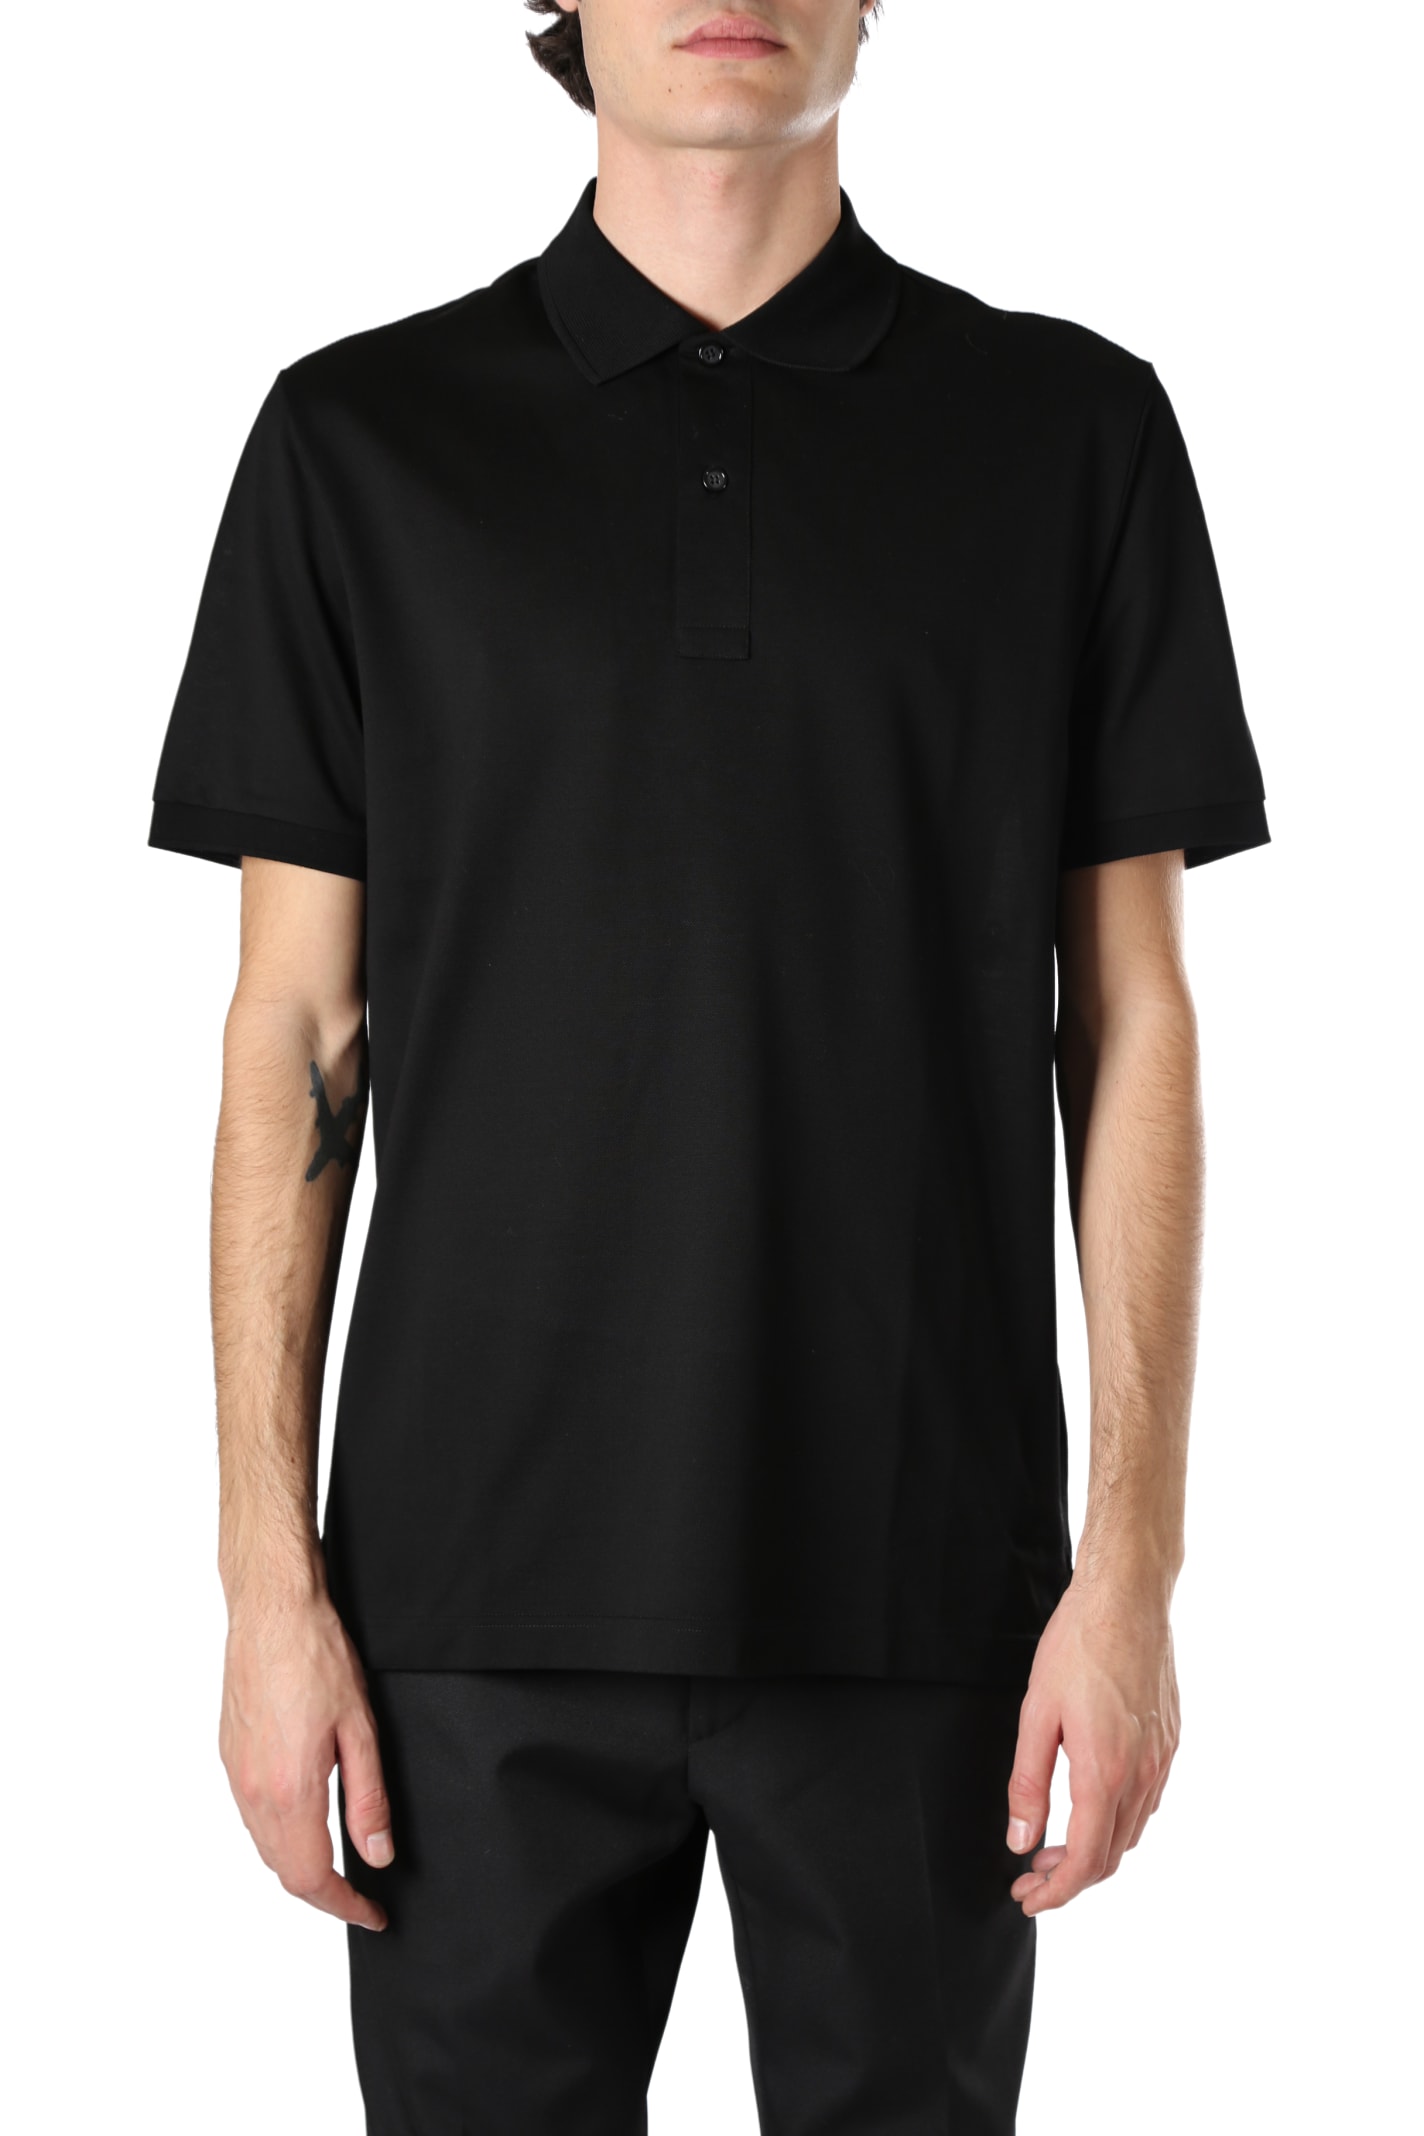 Bottega Veneta Black Cotton Polo Shirt